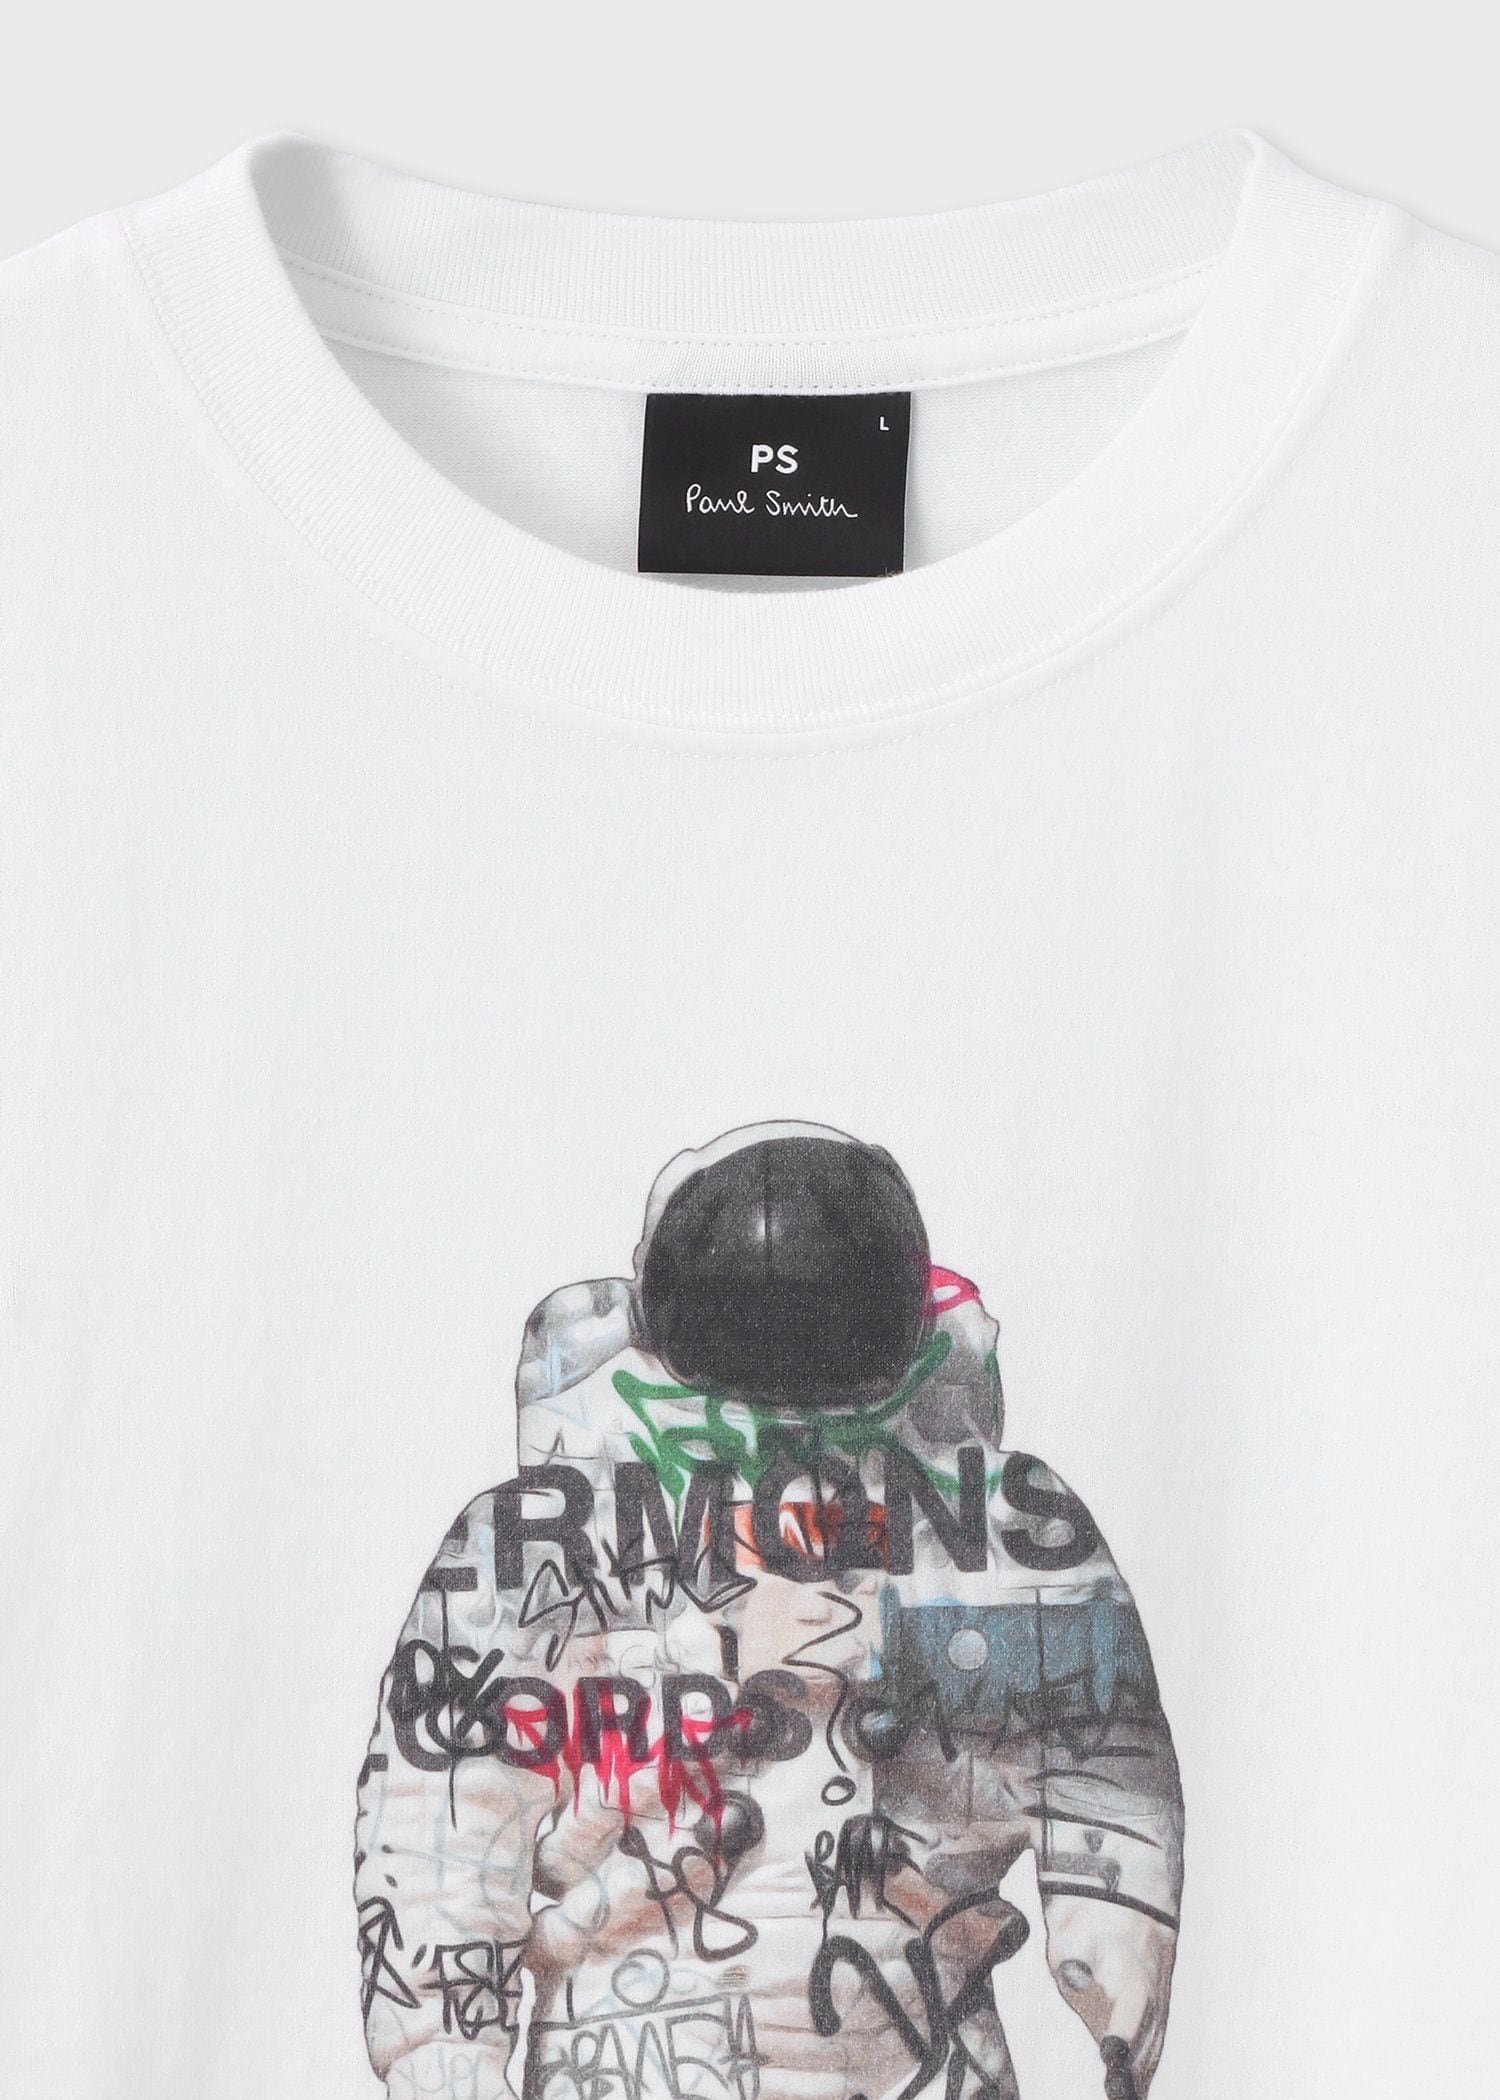 "Astronaut Collage" 半袖Tシャツ